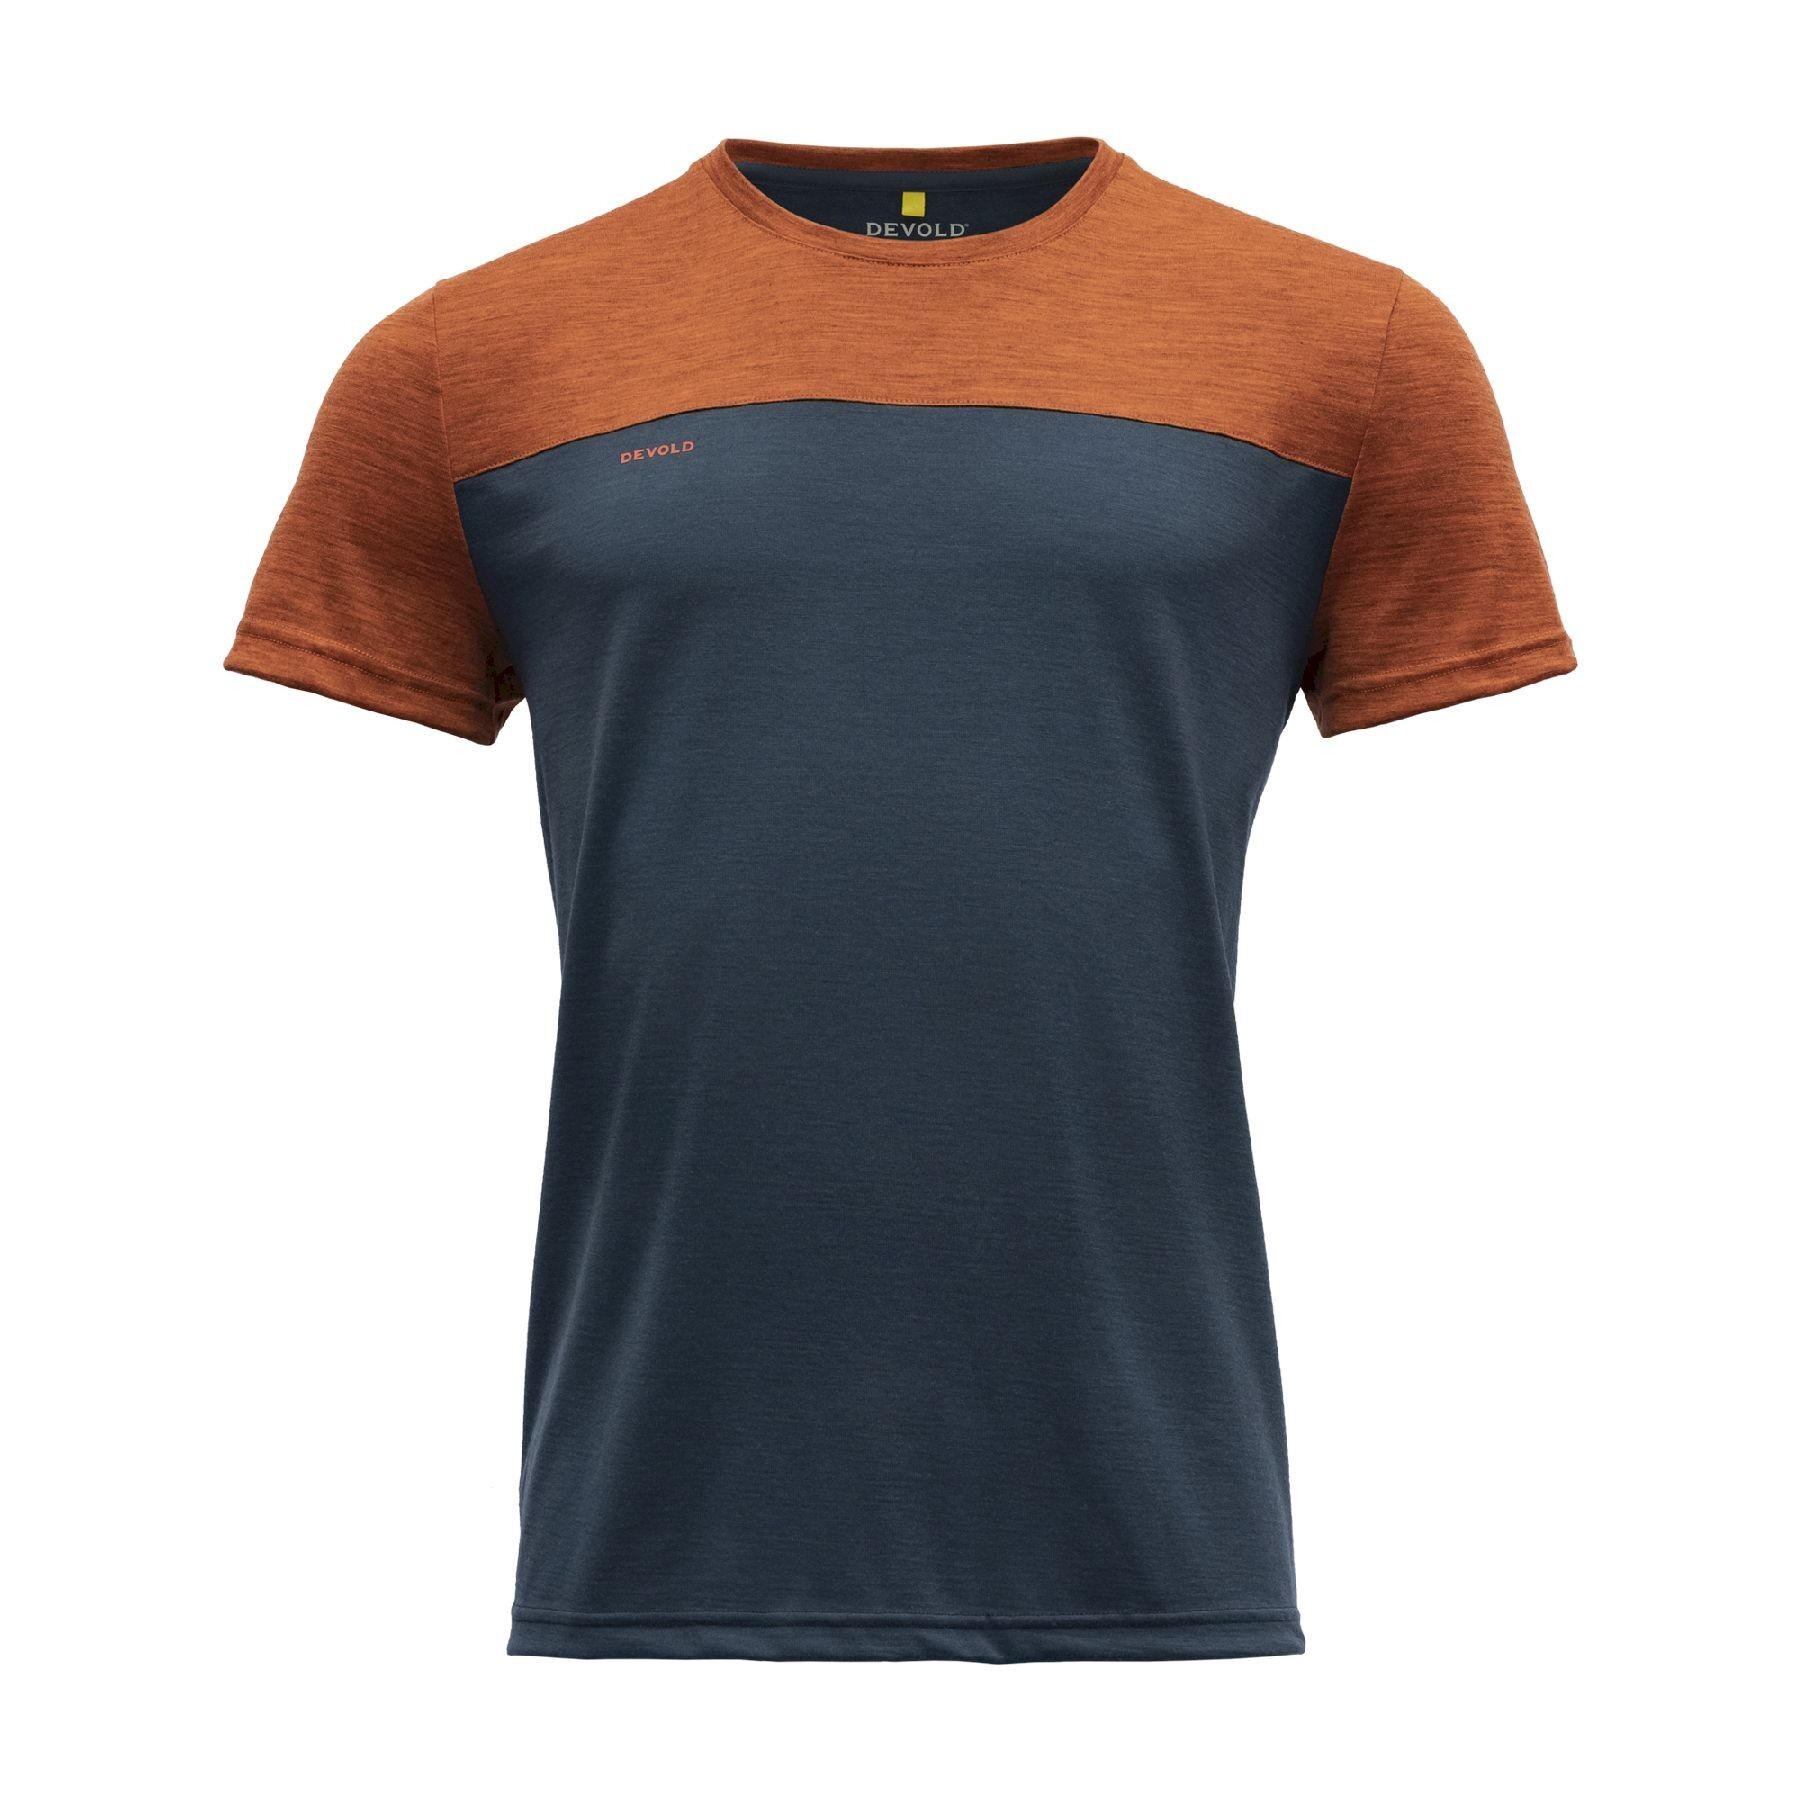 Devold Norang - T-shirt - Men's